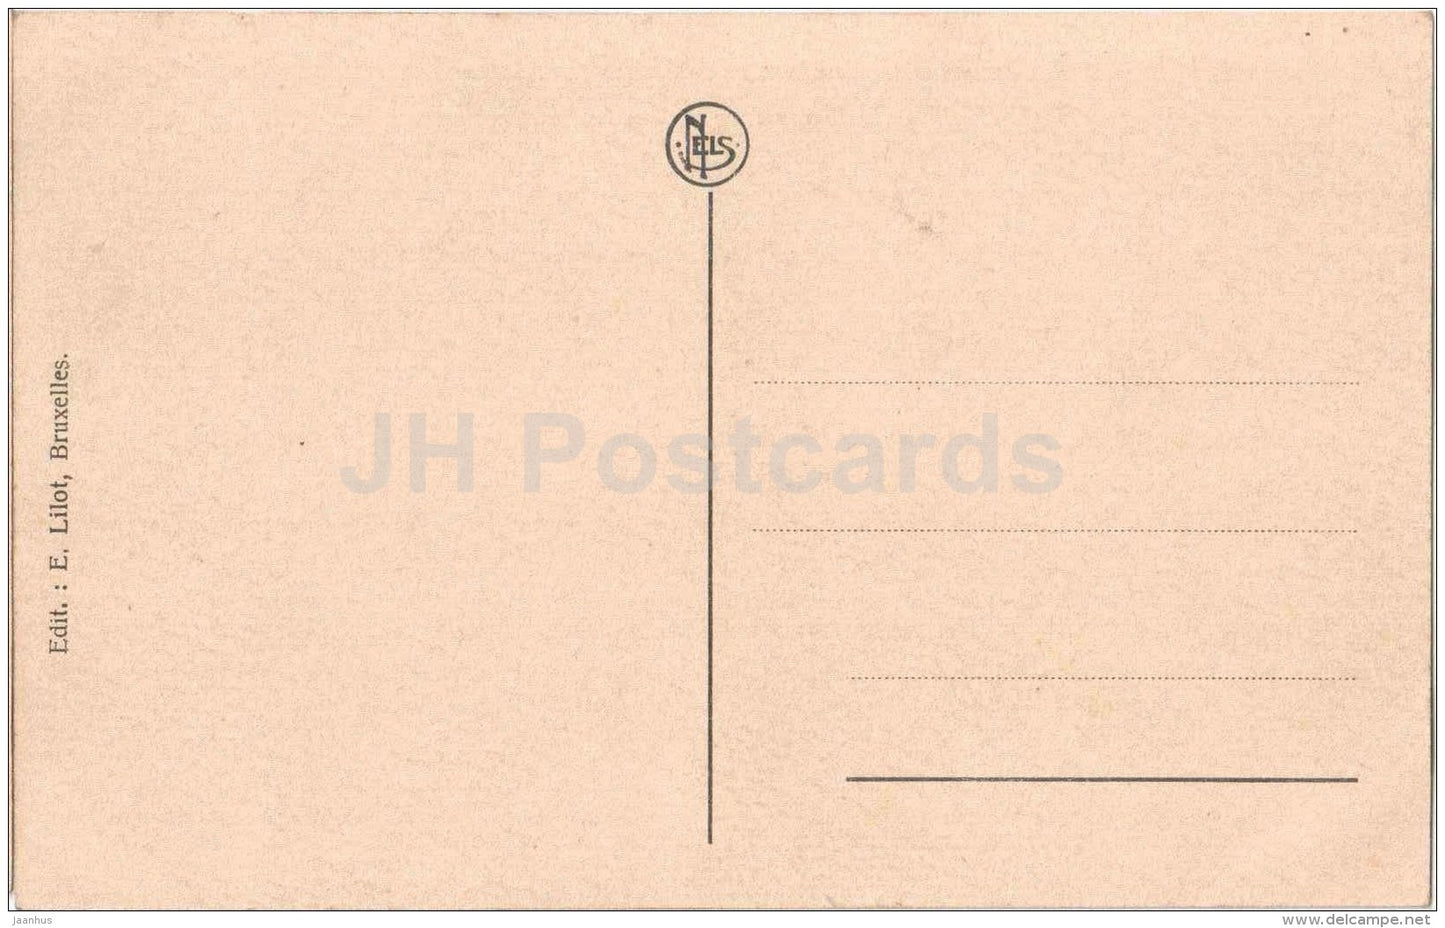 Theatre Flamand et Avenue d´Italie - tram - Anvers - Antwerpen - Belgium - old postcard - unused - JH Postcards